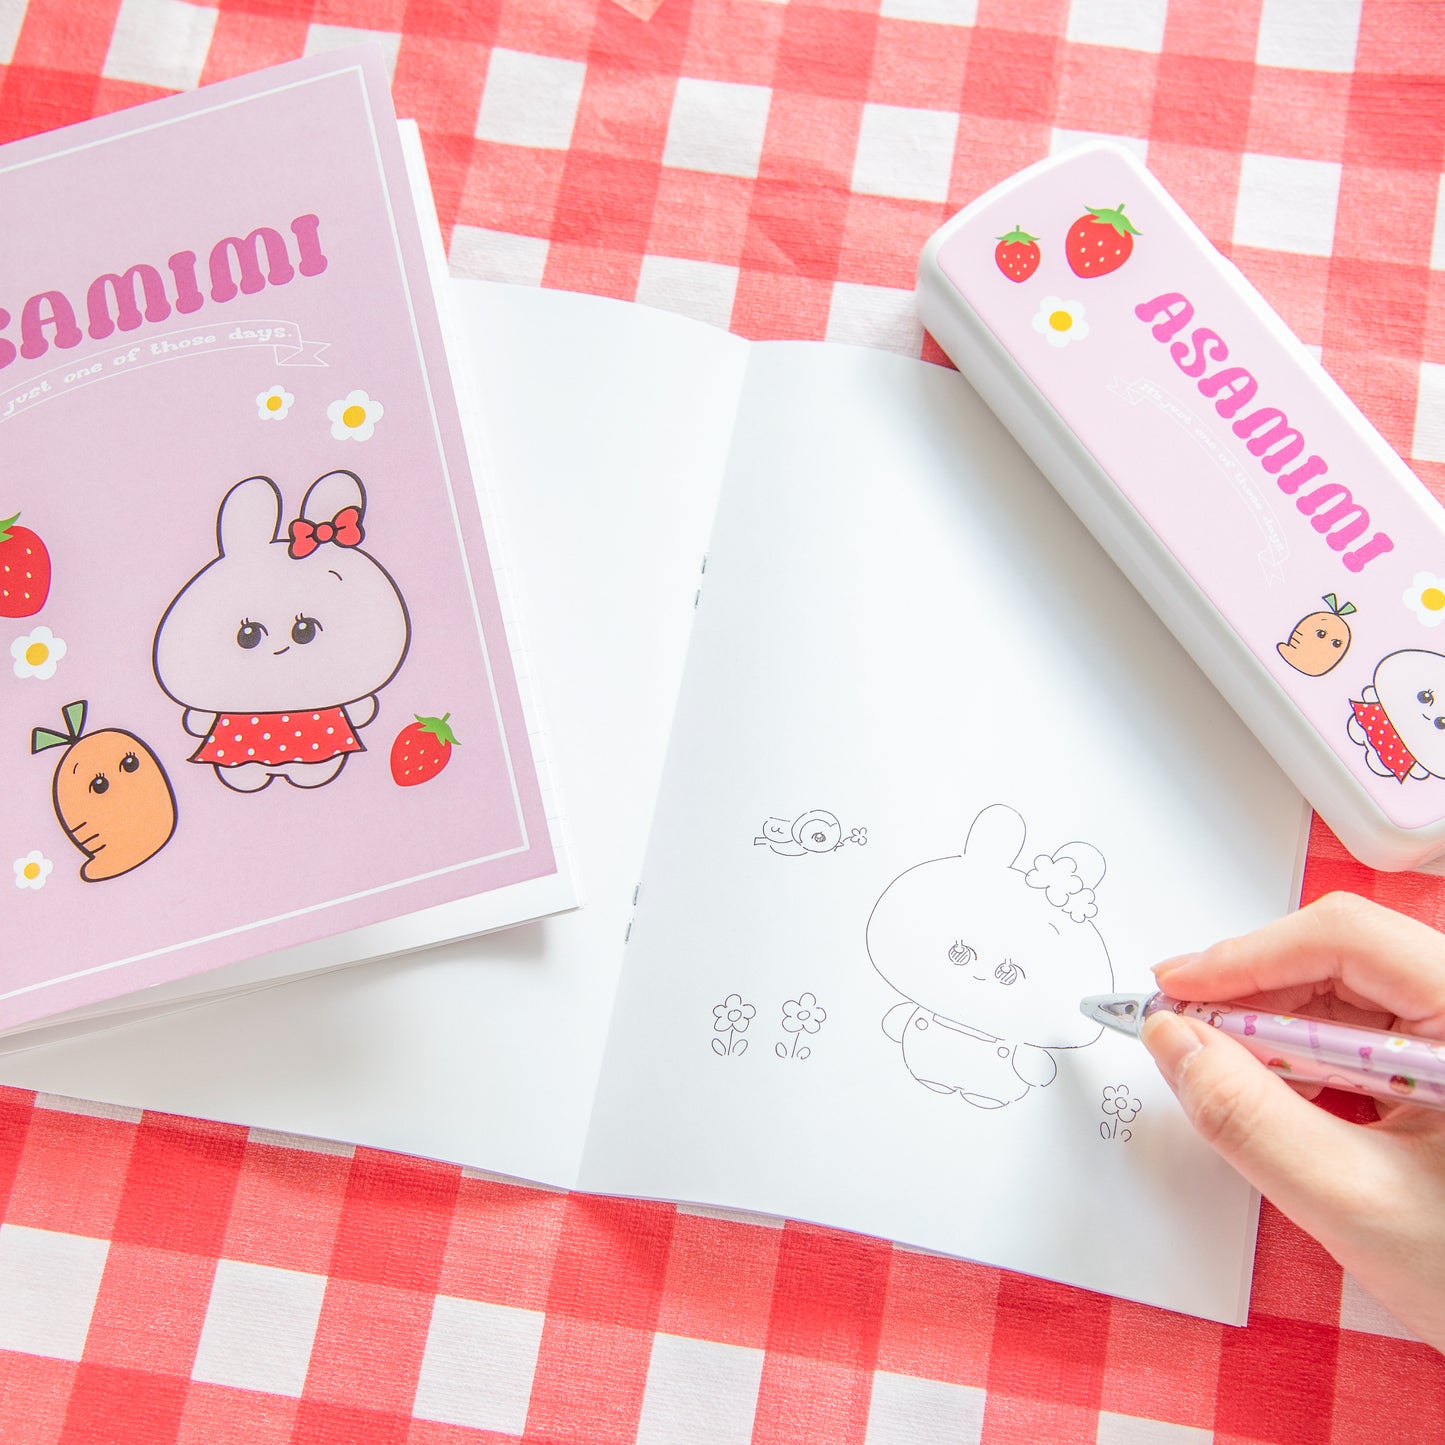 [Asamimi-chan] A5 notebook (retro) [shipped in mid-November]